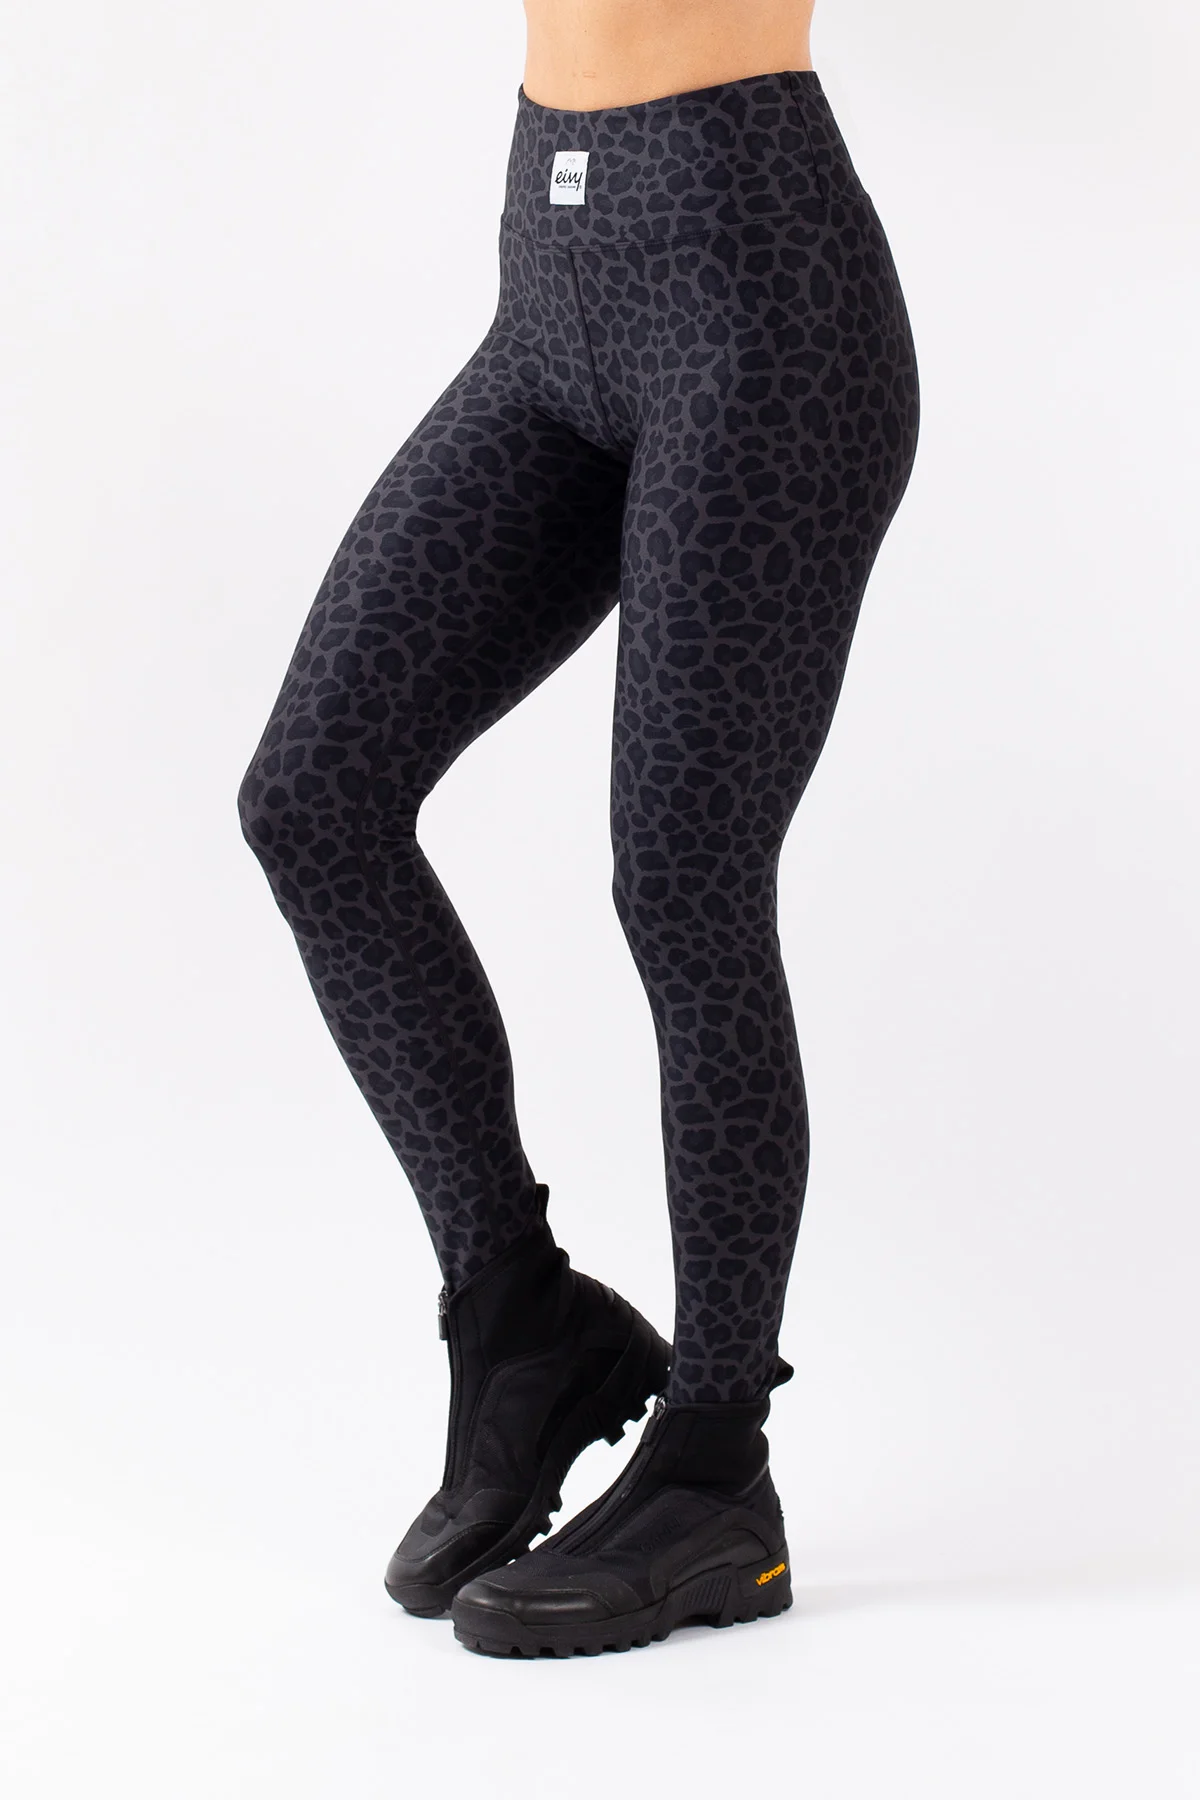 Eivy Women's Icecold Tights Leggings, Black Leopard, XXL 